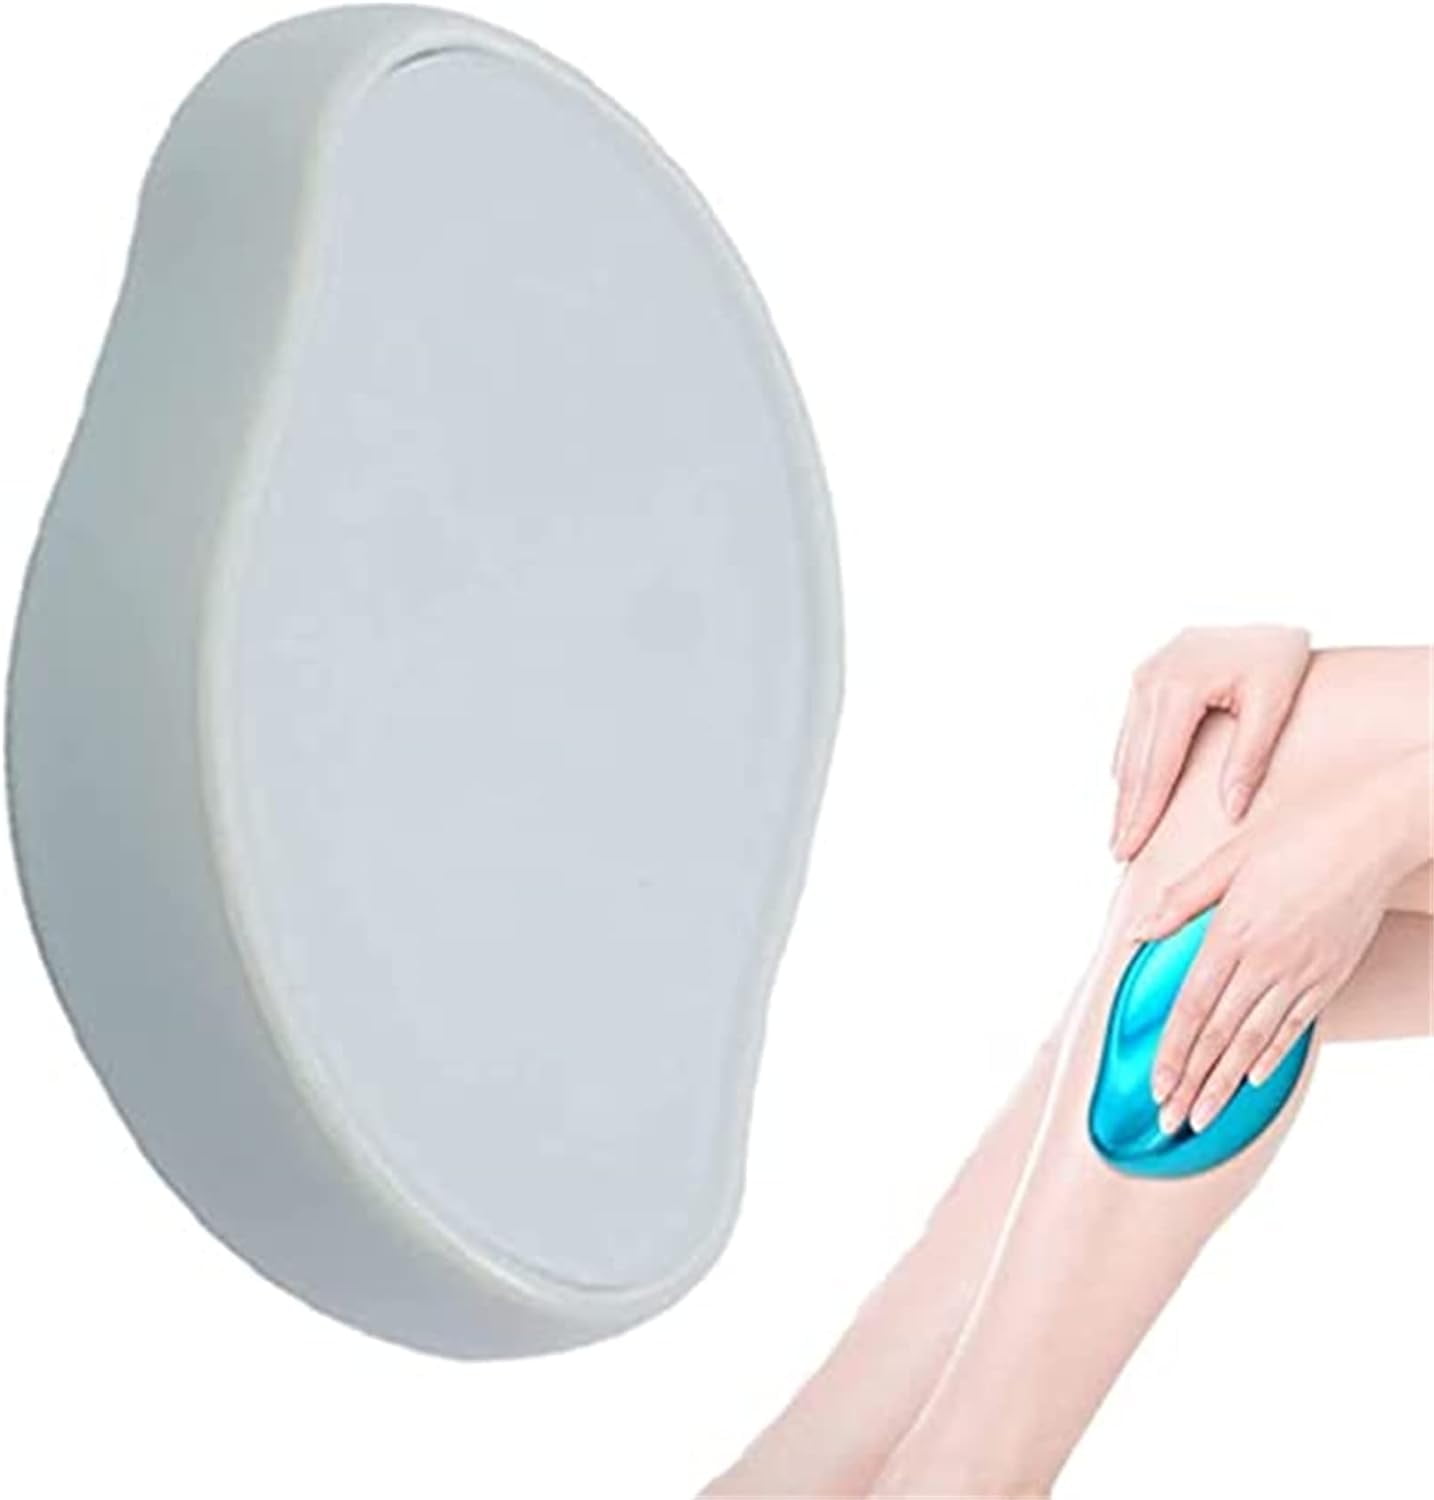 APPARIYO STORE Slique Eyebrow Threading Machine For Face and Body